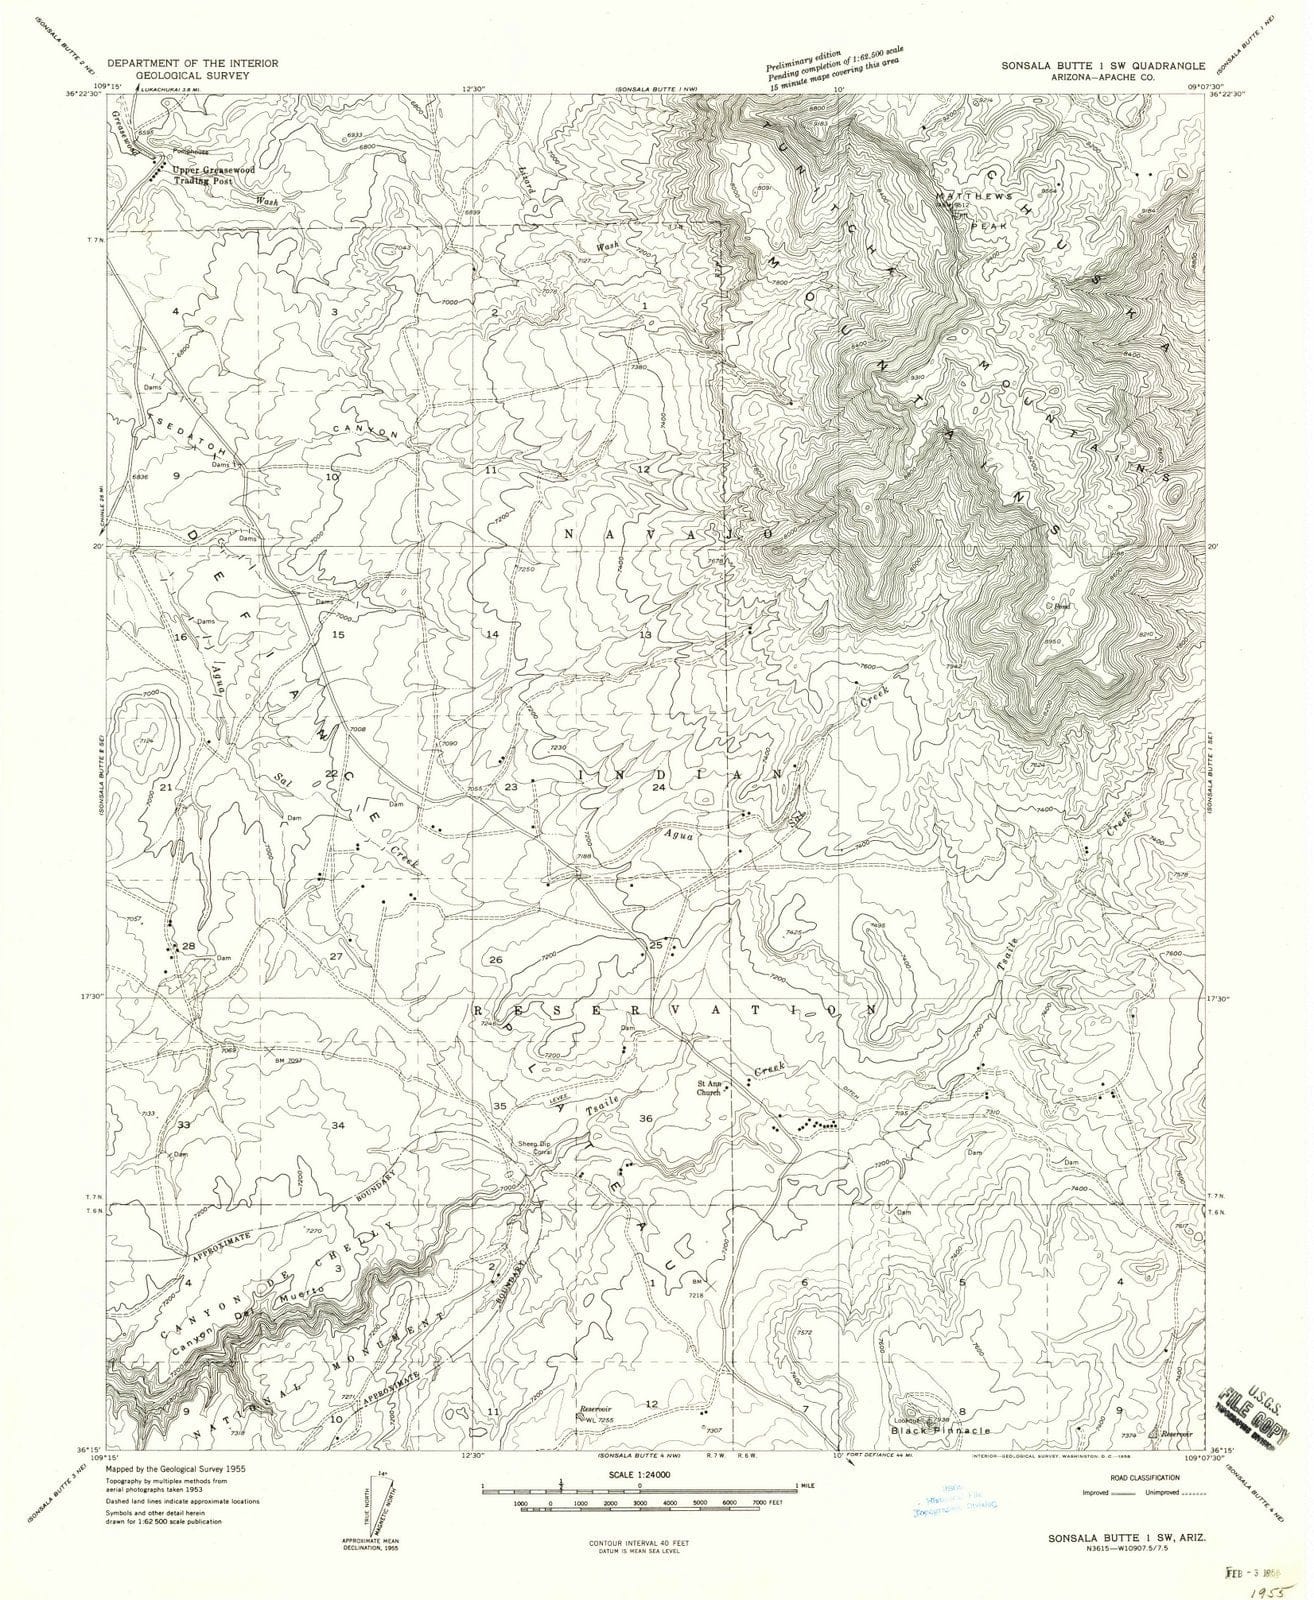 1955 Sonsala Butte 1, AZ - Arizona - USGS Topographic Map v4